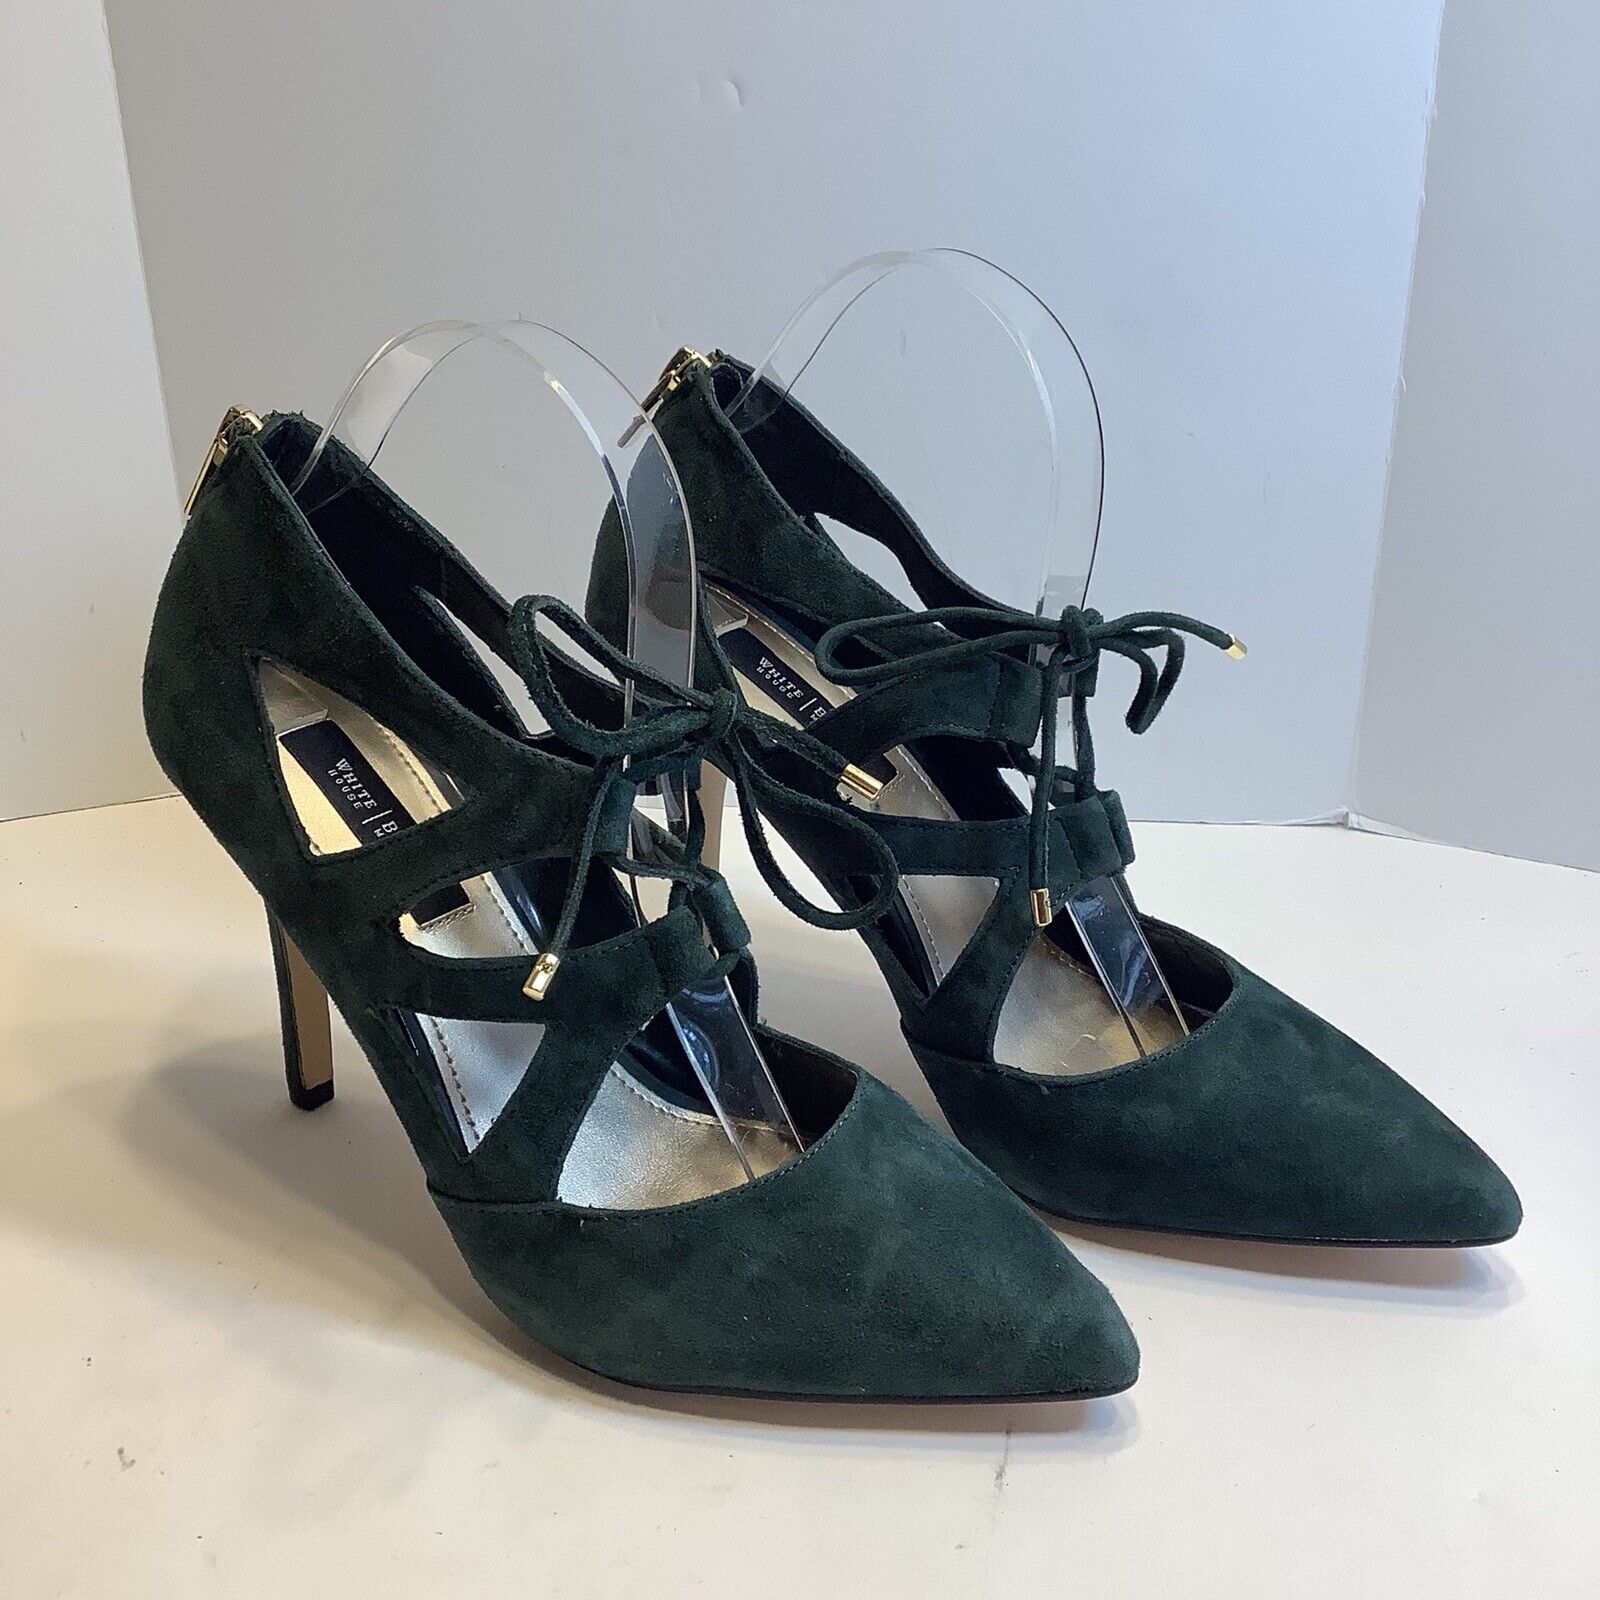 Safety and trust White House Black Market Emerald Stiletto Suede Heels Delph Regular discount 8.5M